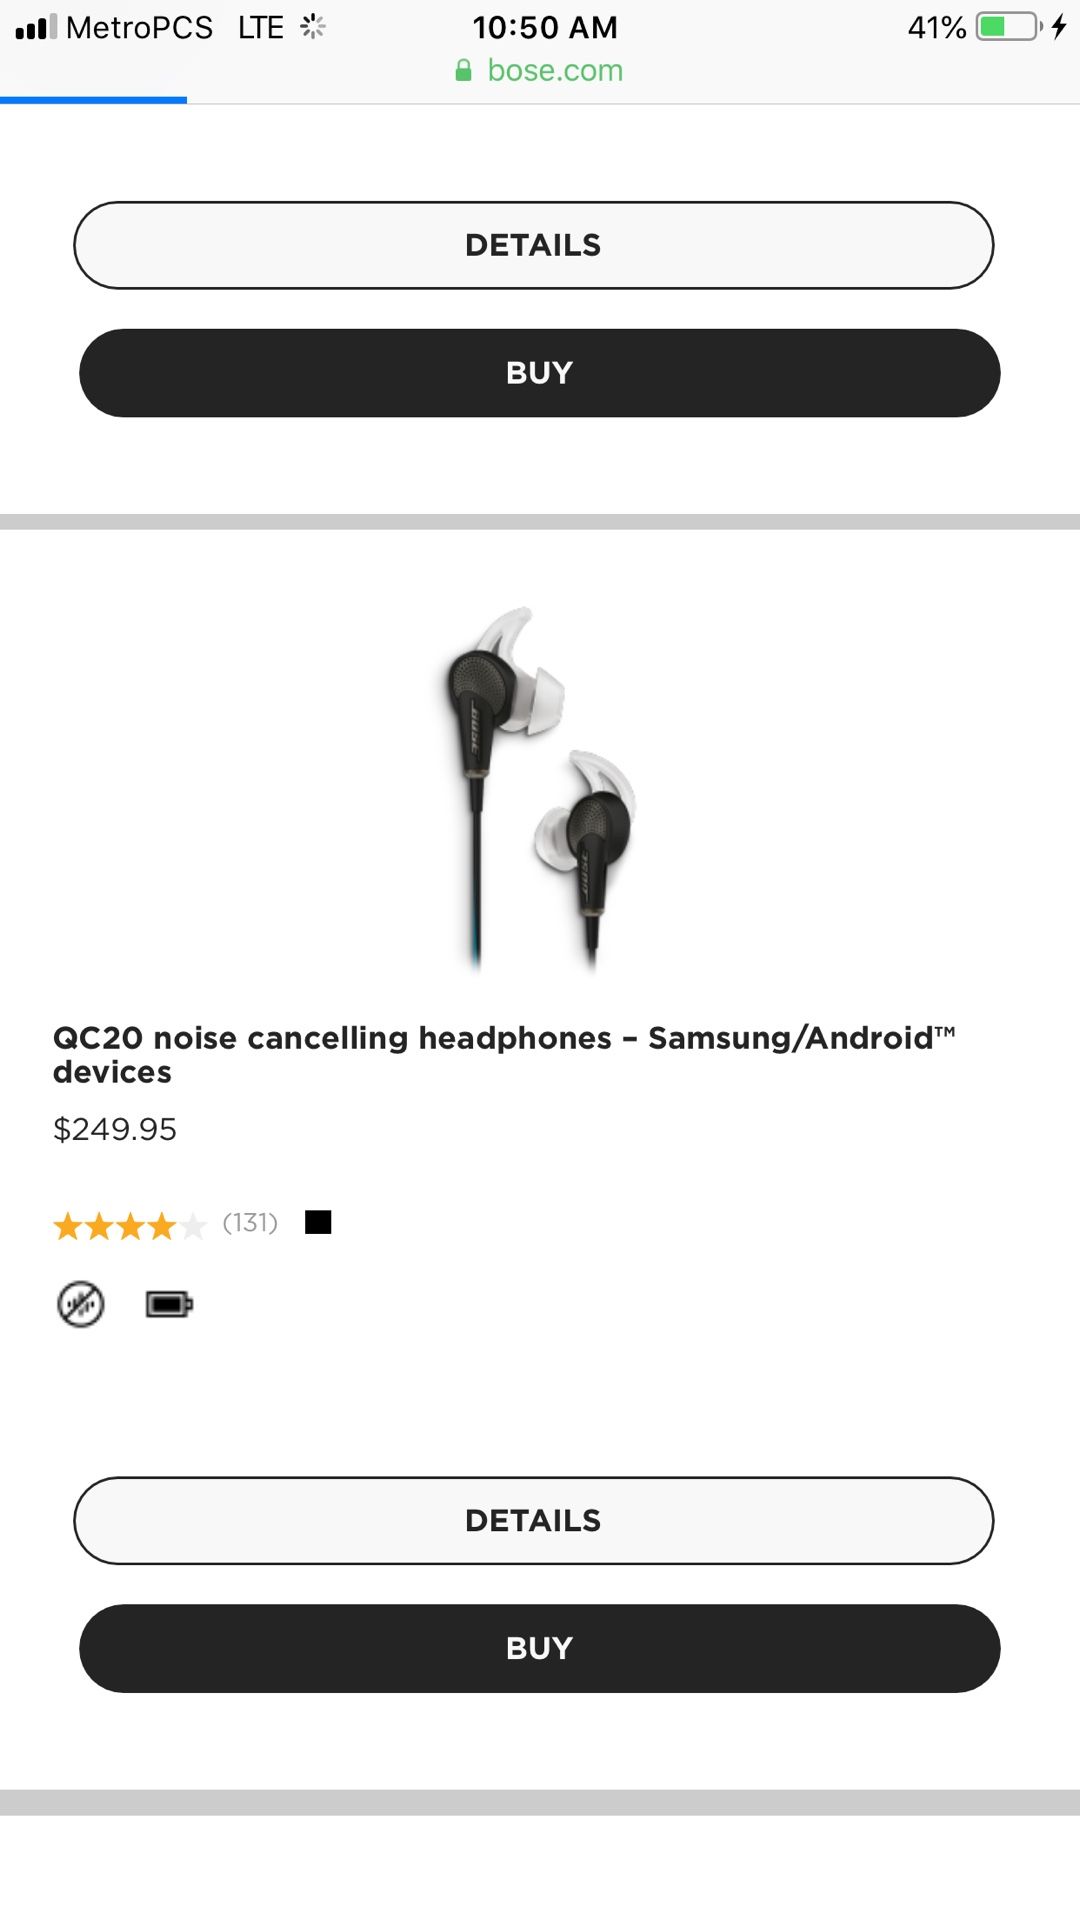 Bose Qc20 headphones